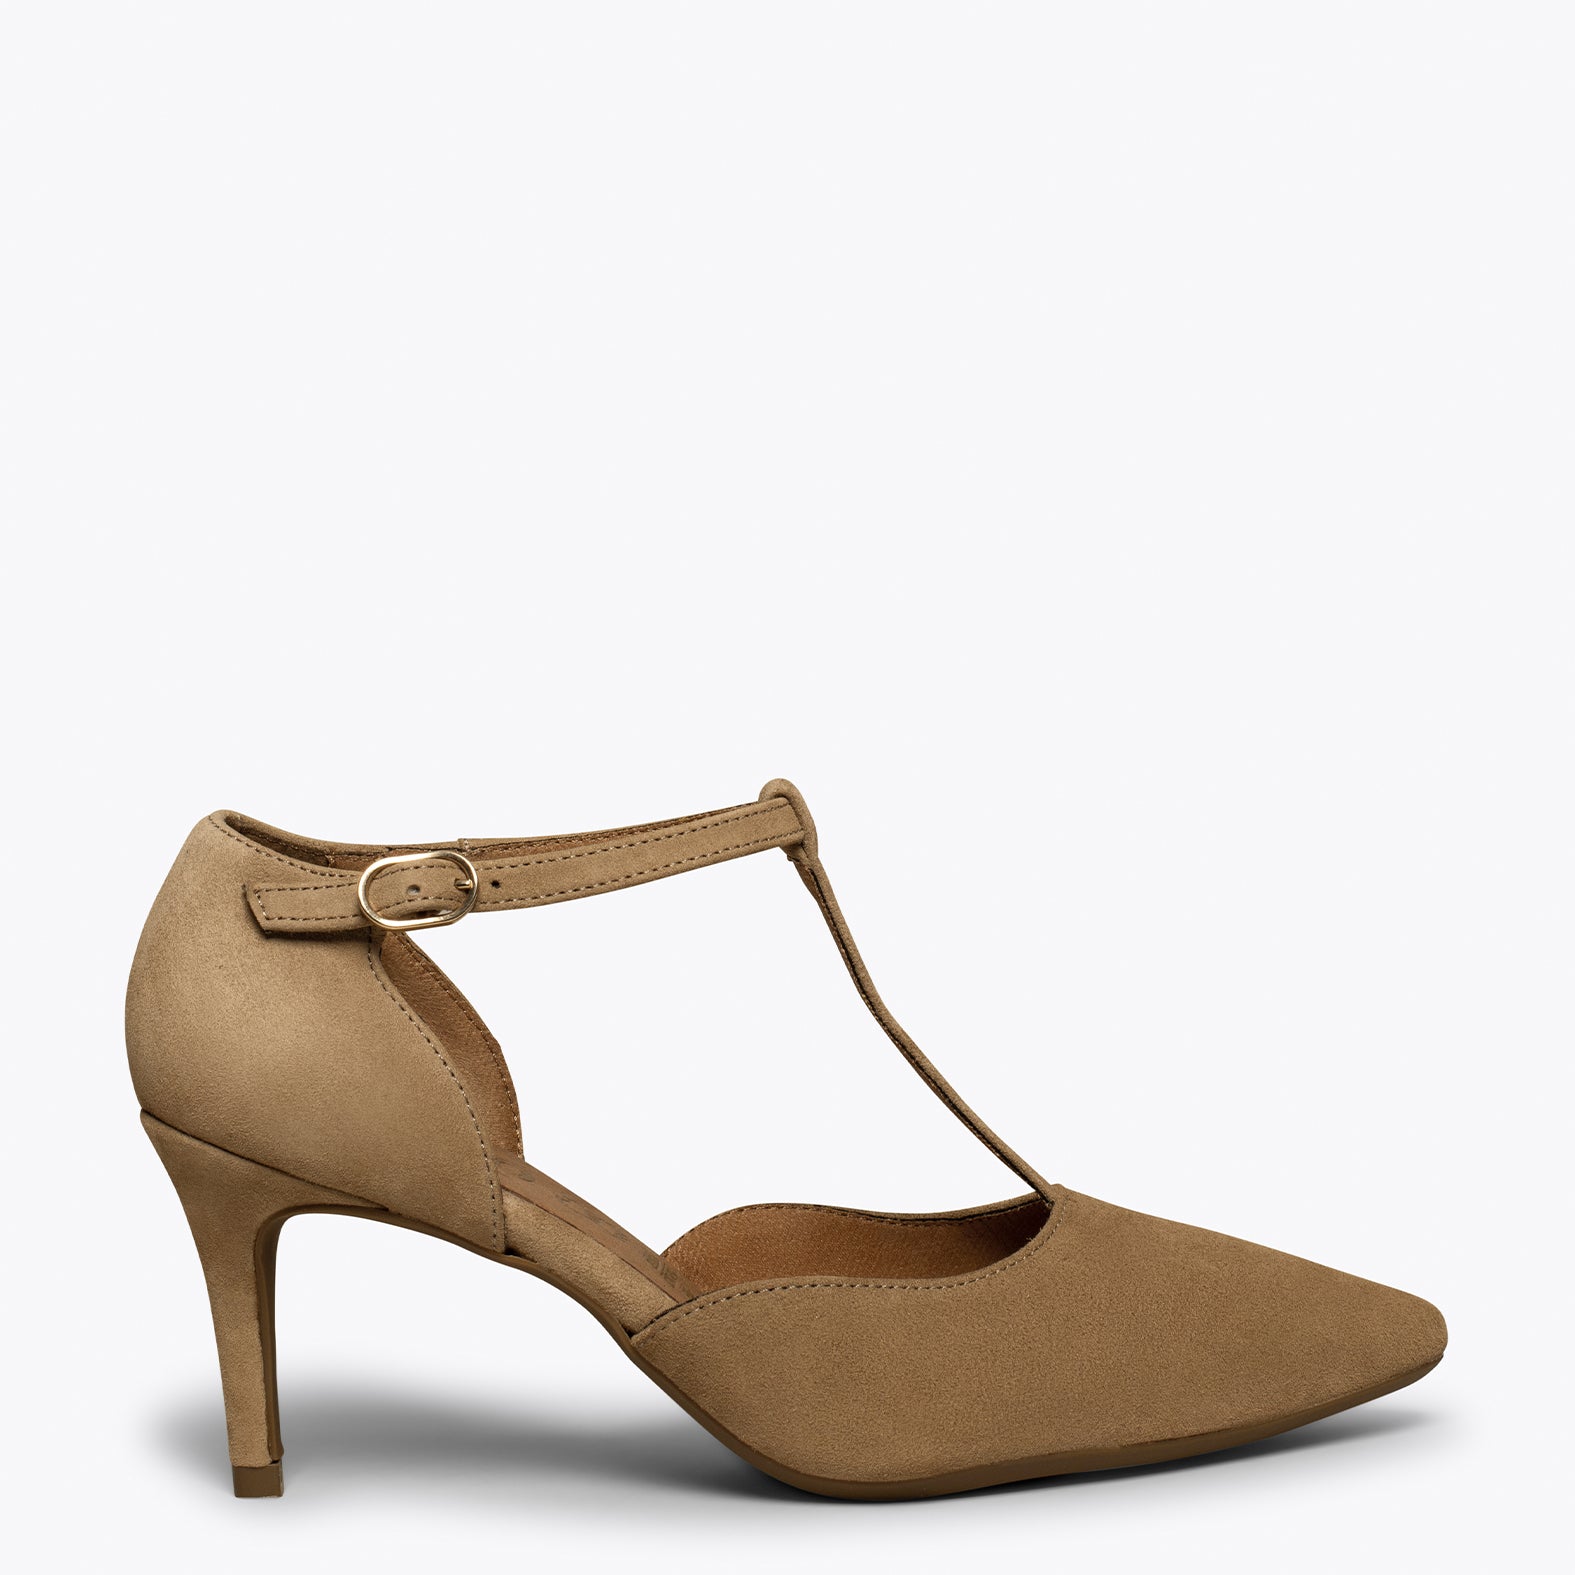 COCKTAIL – BEIGE elegant mid heel shoes